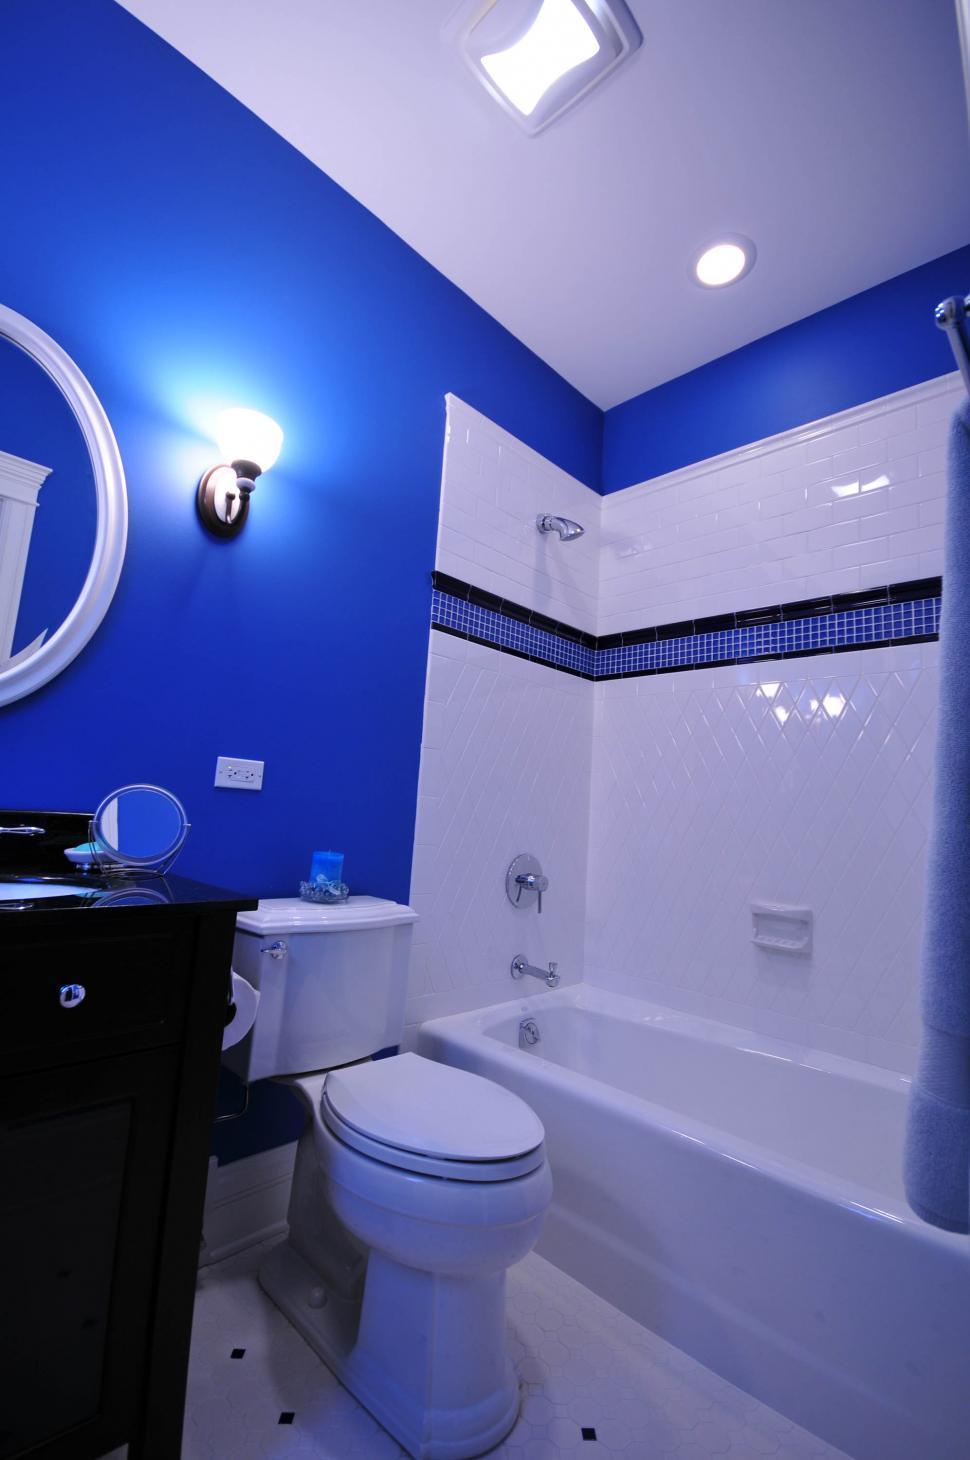 Free Image of Blue bathroom 